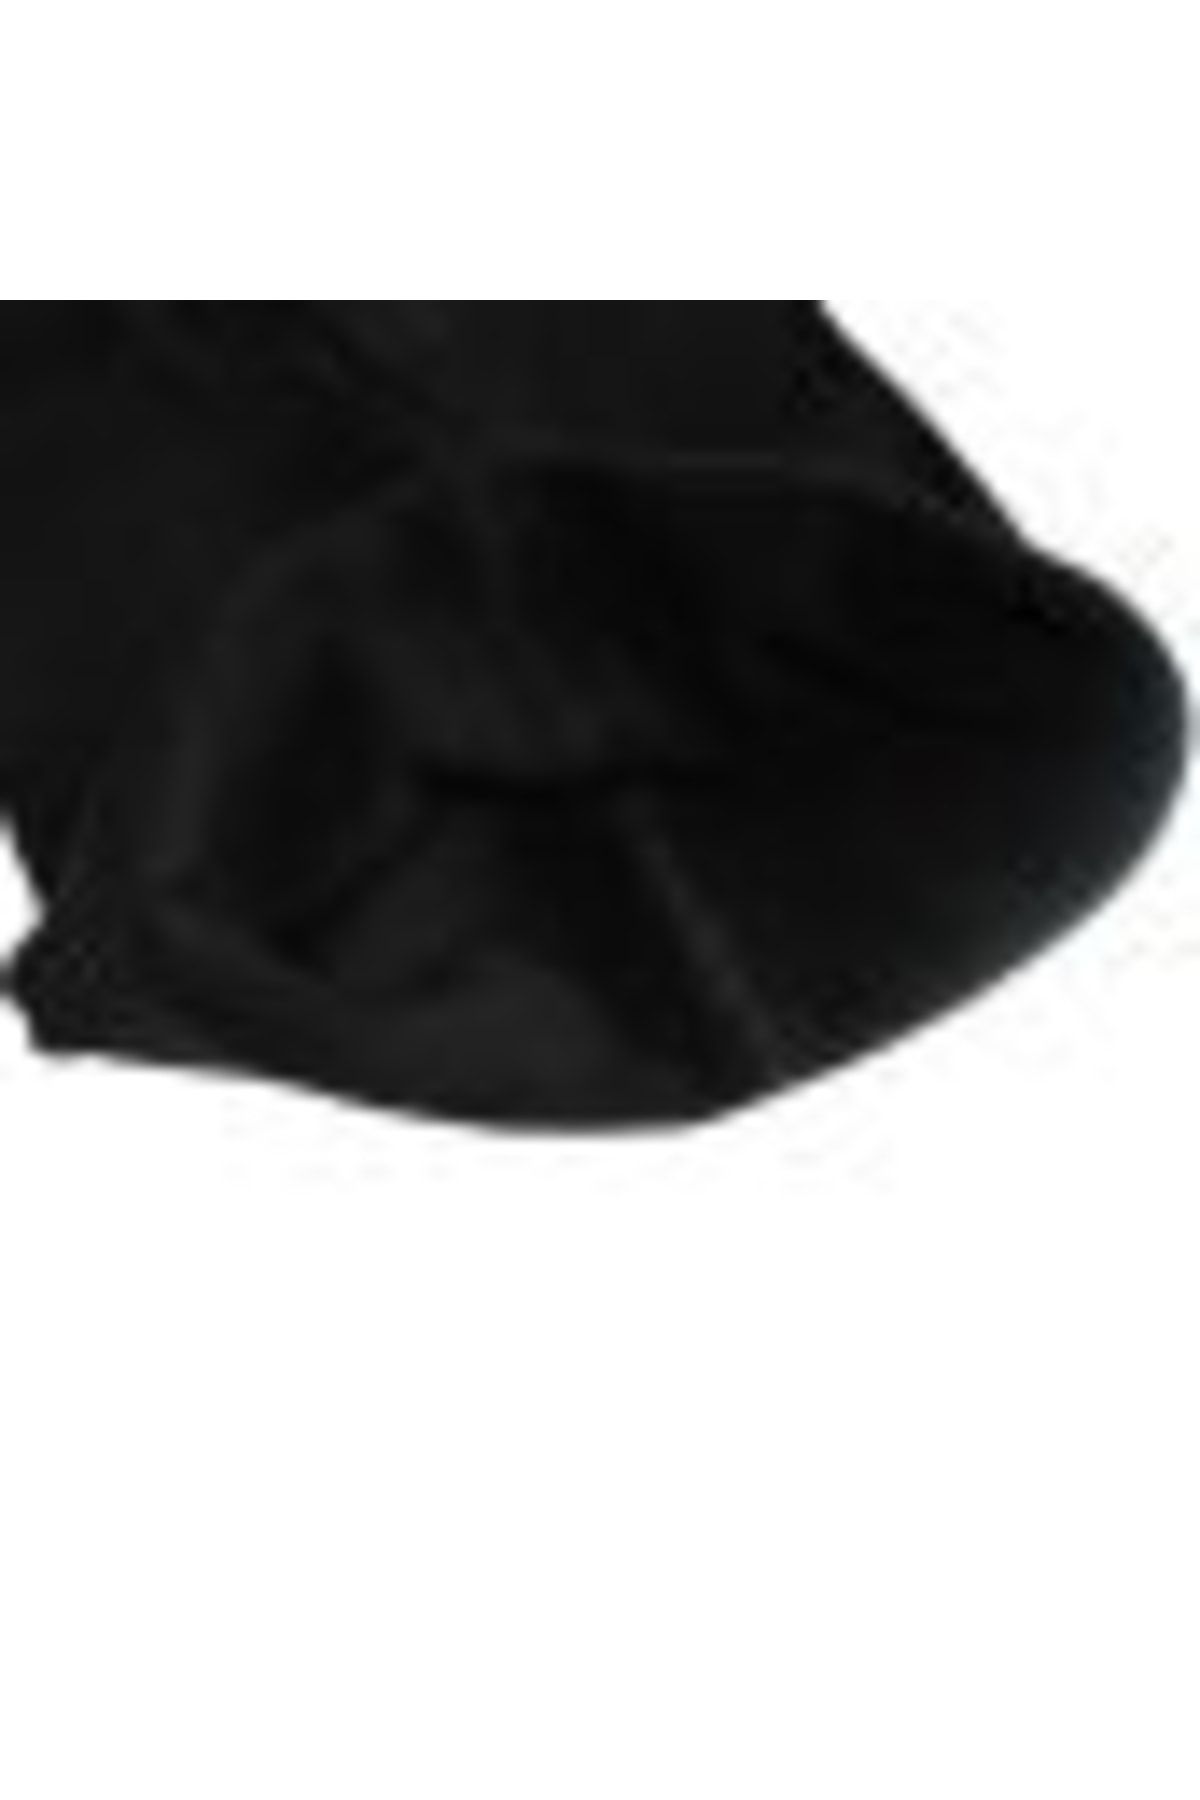 İpek Class 200 Den Bayan Termal Külotlu Çorap Siyah 1 Adet Siyah